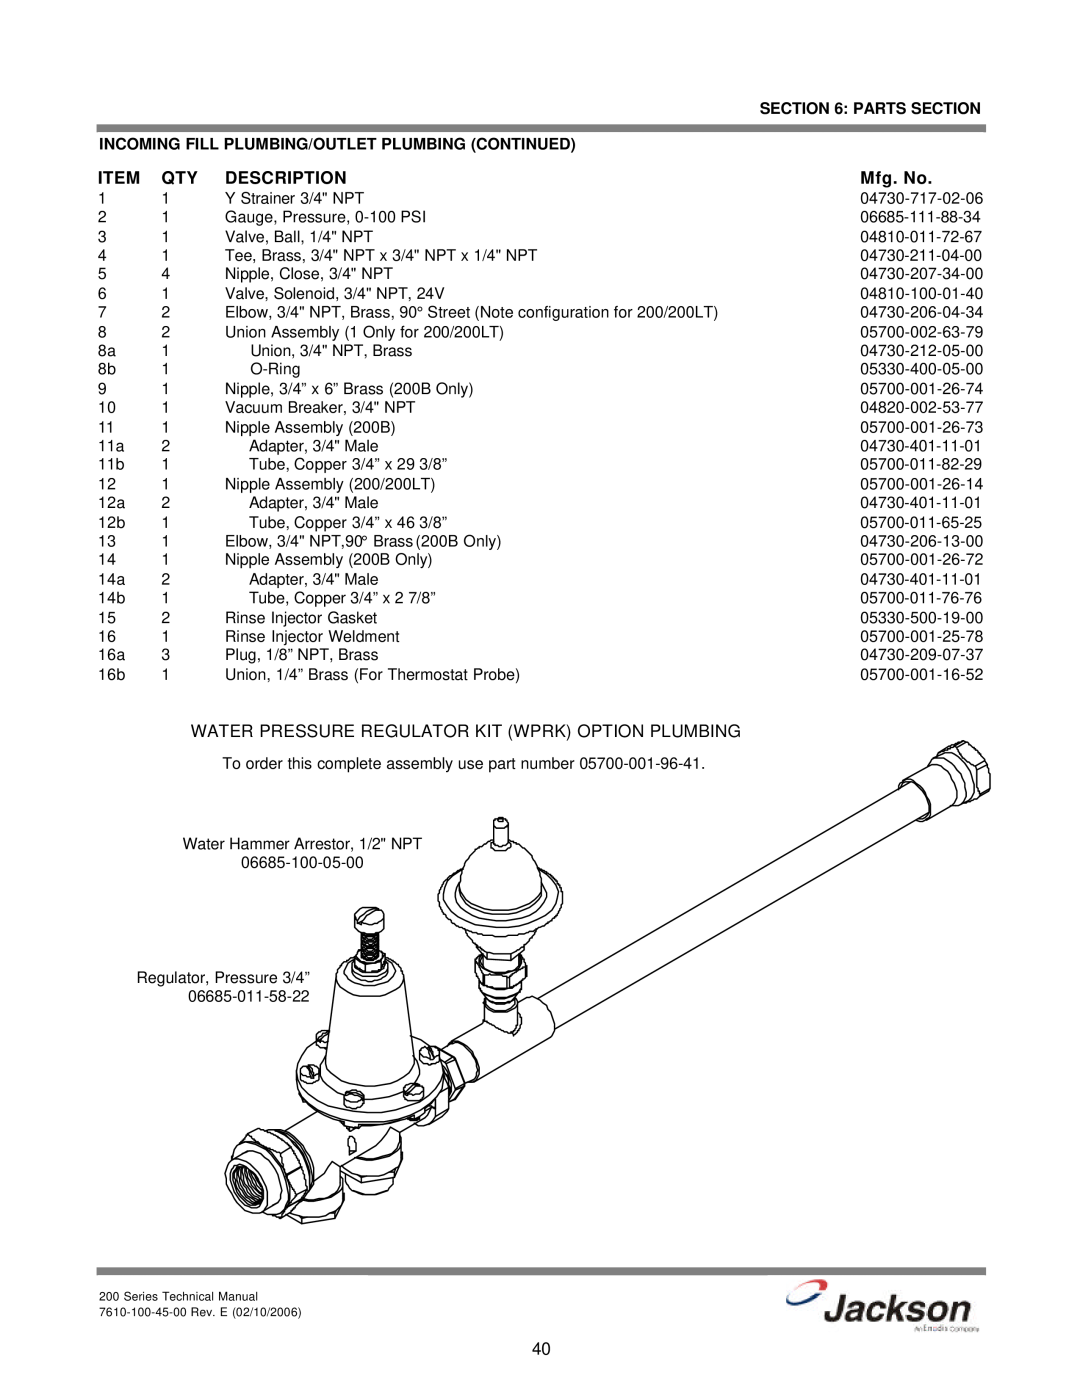 Jackson 200 Water Pressure Regulator Kit Wprk Option Plumbing, Incoming Fill Plumbing/Outlet Plumbing Continued, Mfg. No 